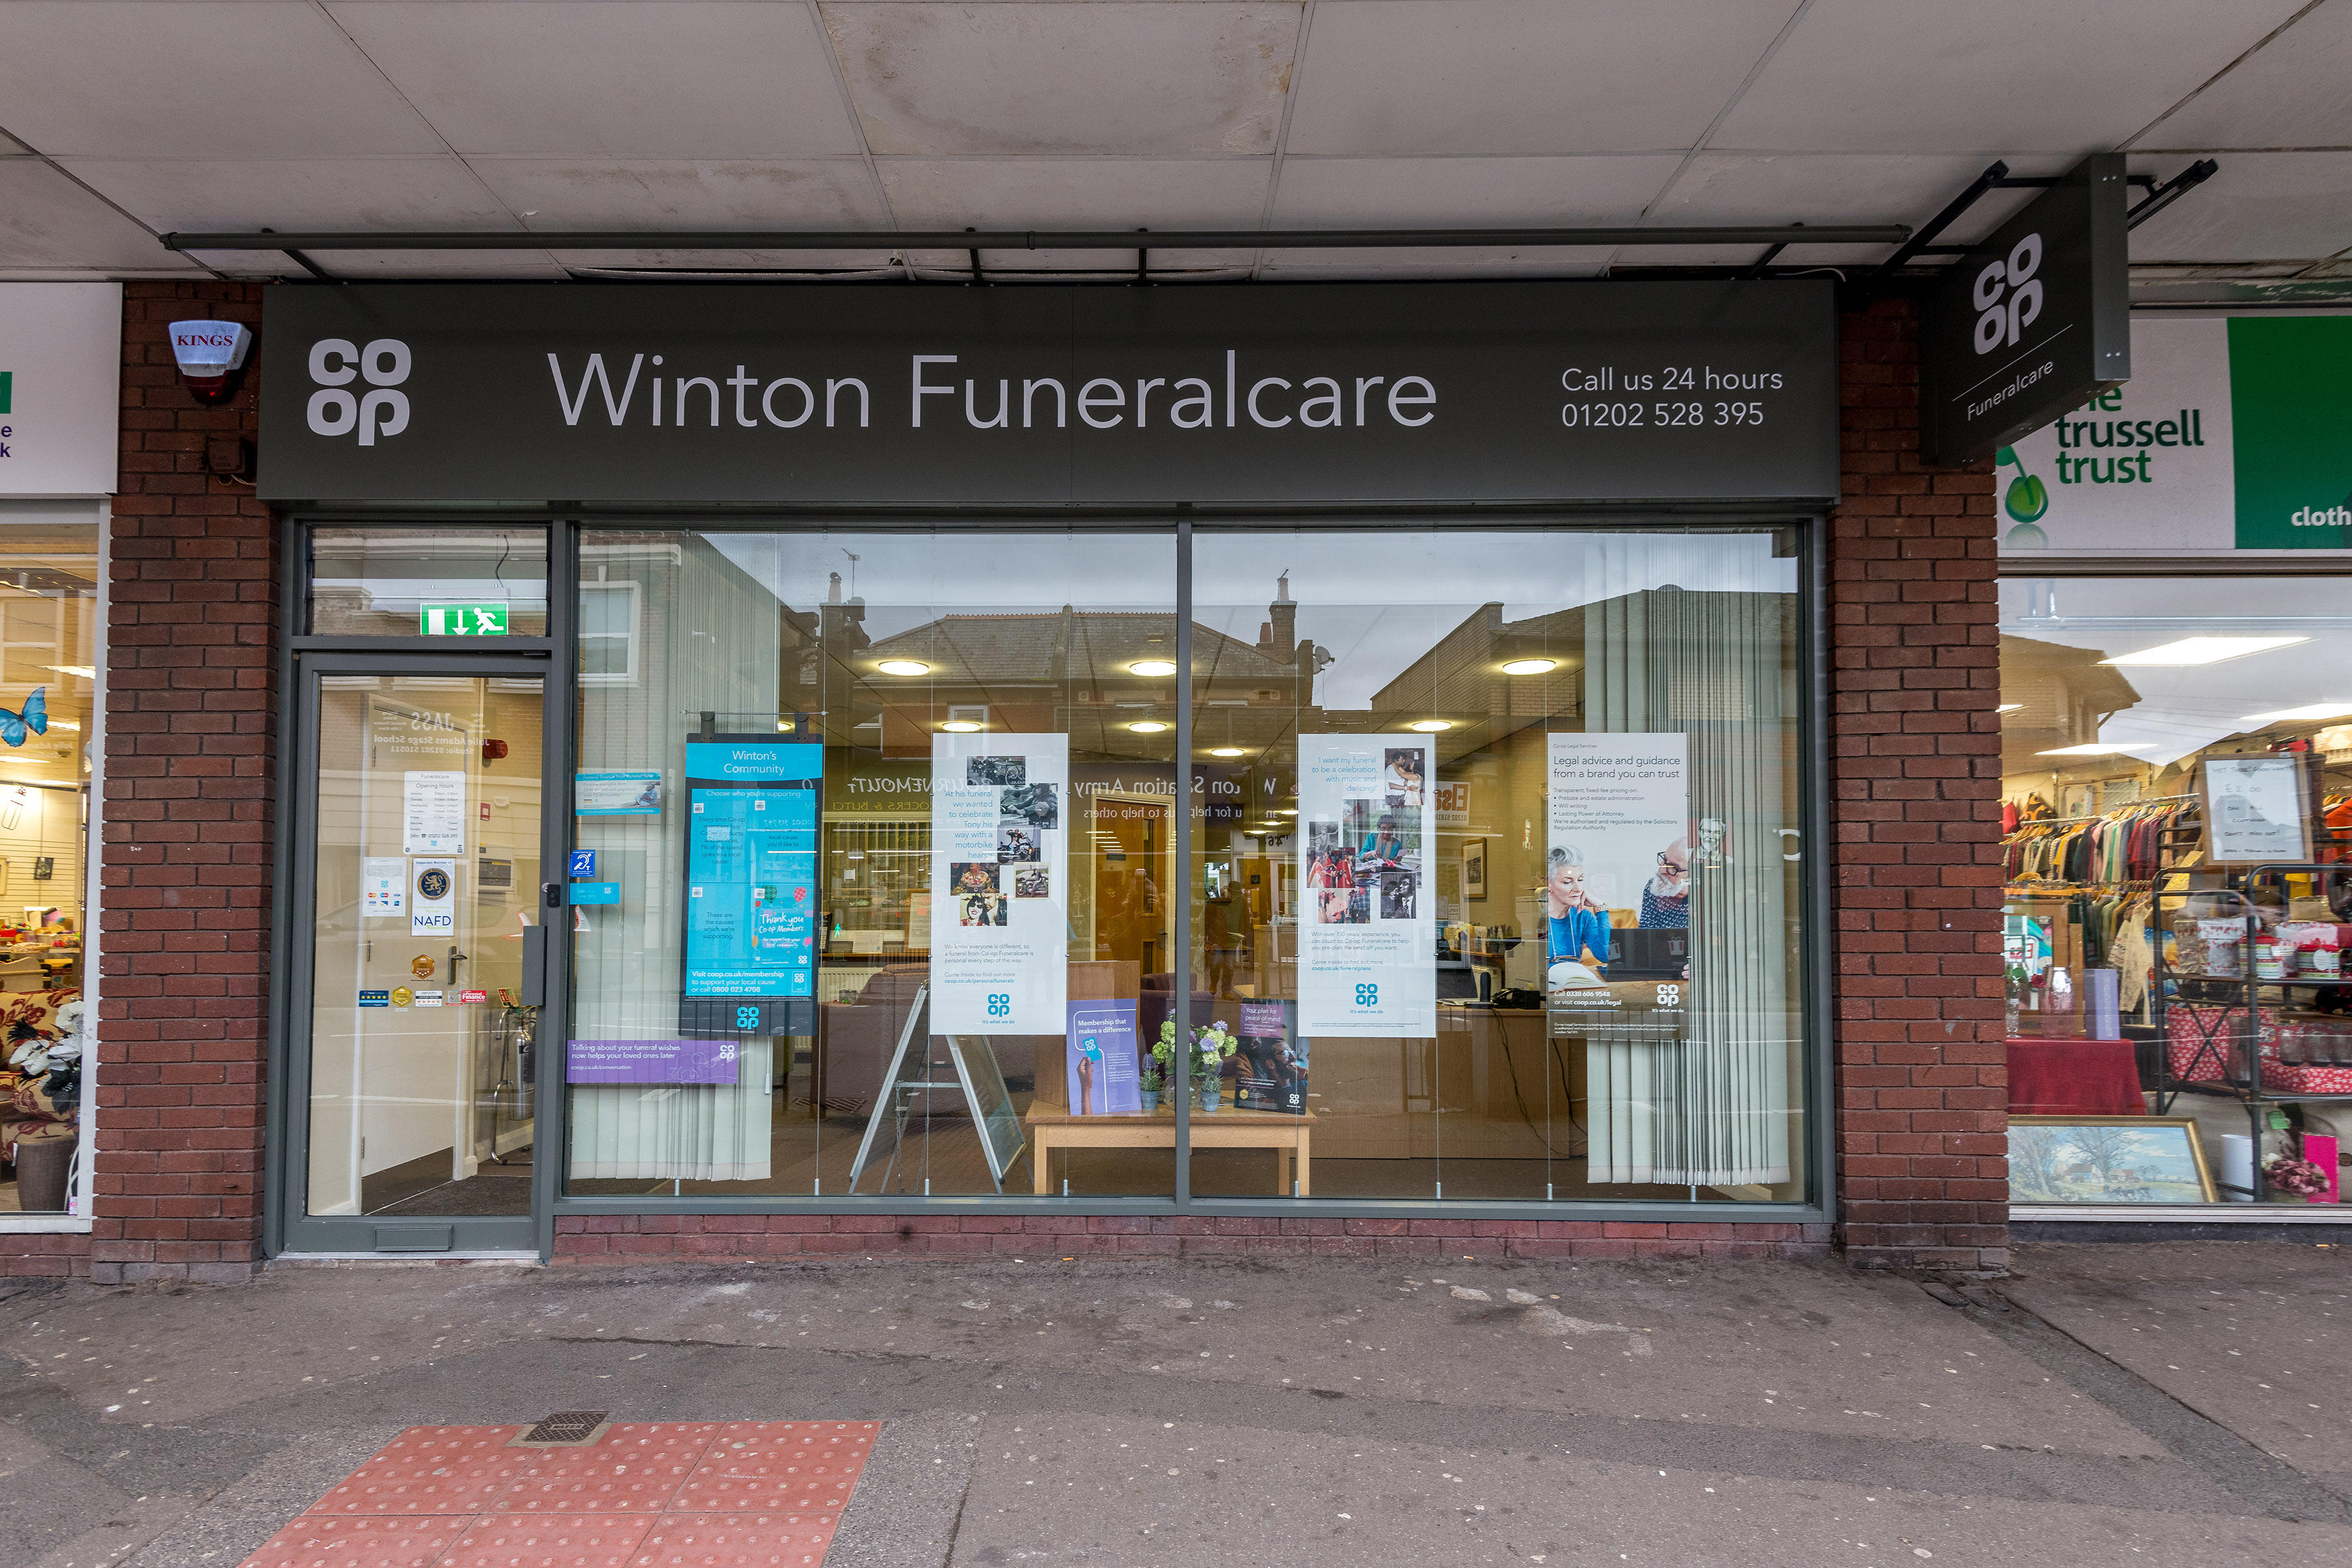 Images Co-op Funeralcare, Winton